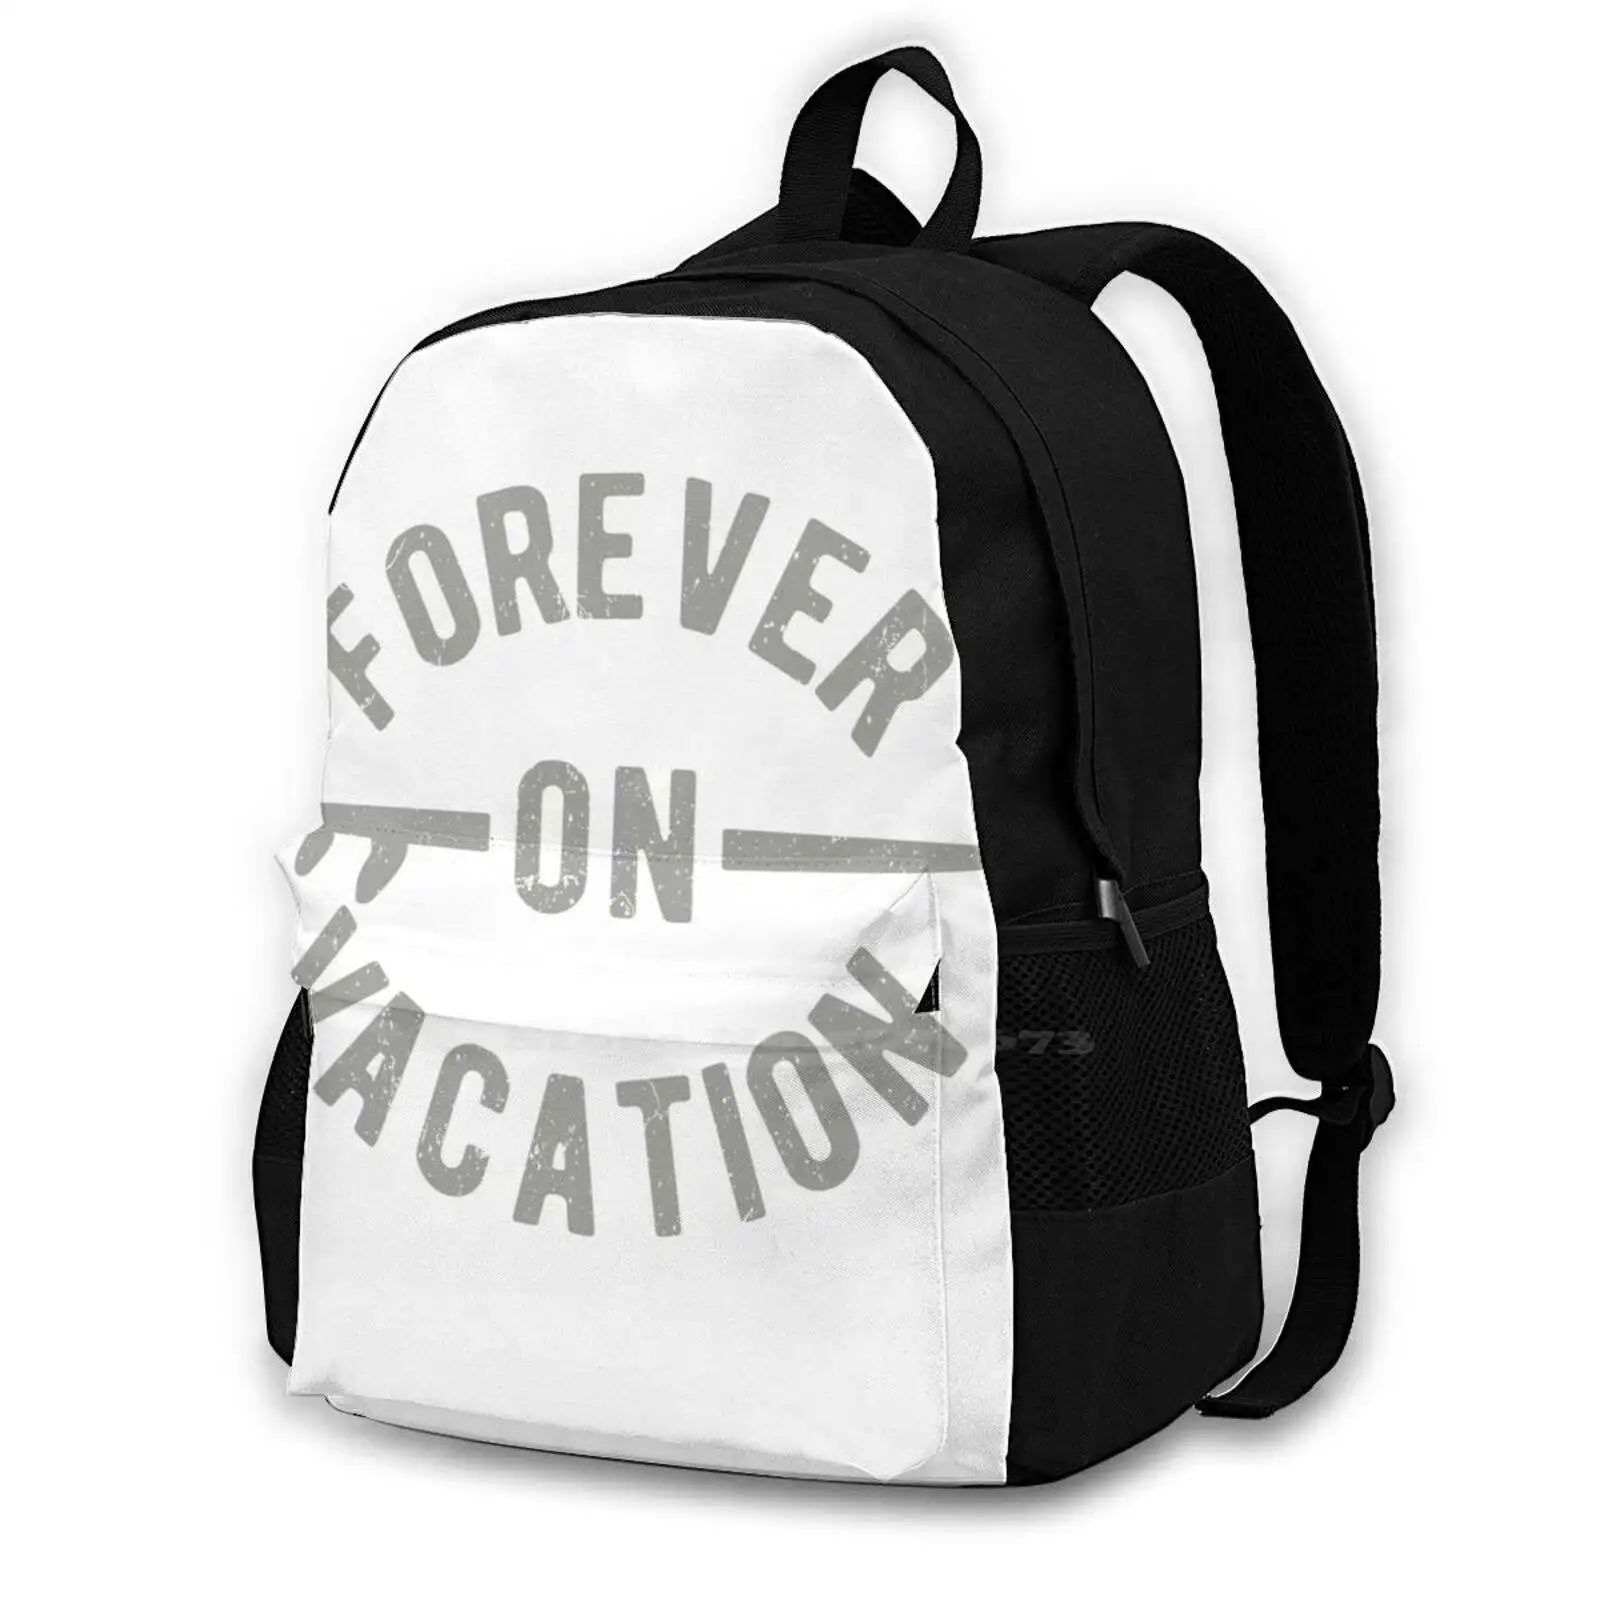 

Distressed Surf Sticker Forerver On Vacation Bag Backpack For Men Women Girls Teenage Black Surf Surfer Beach Ocean Surfing